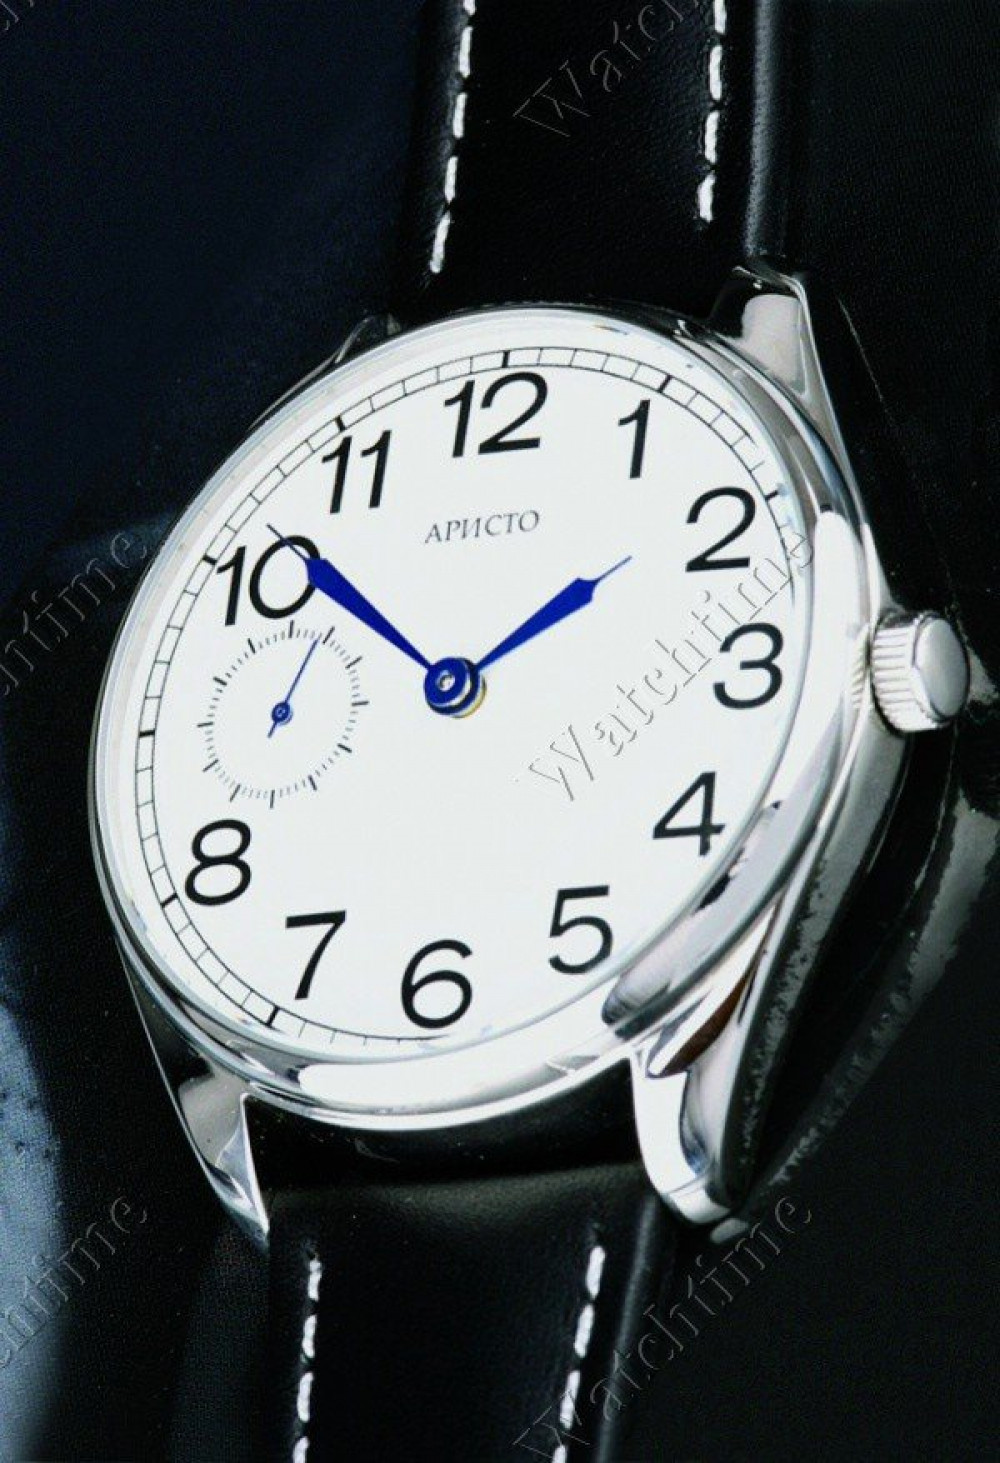 Zegarek firmy Apucto, model Klassik